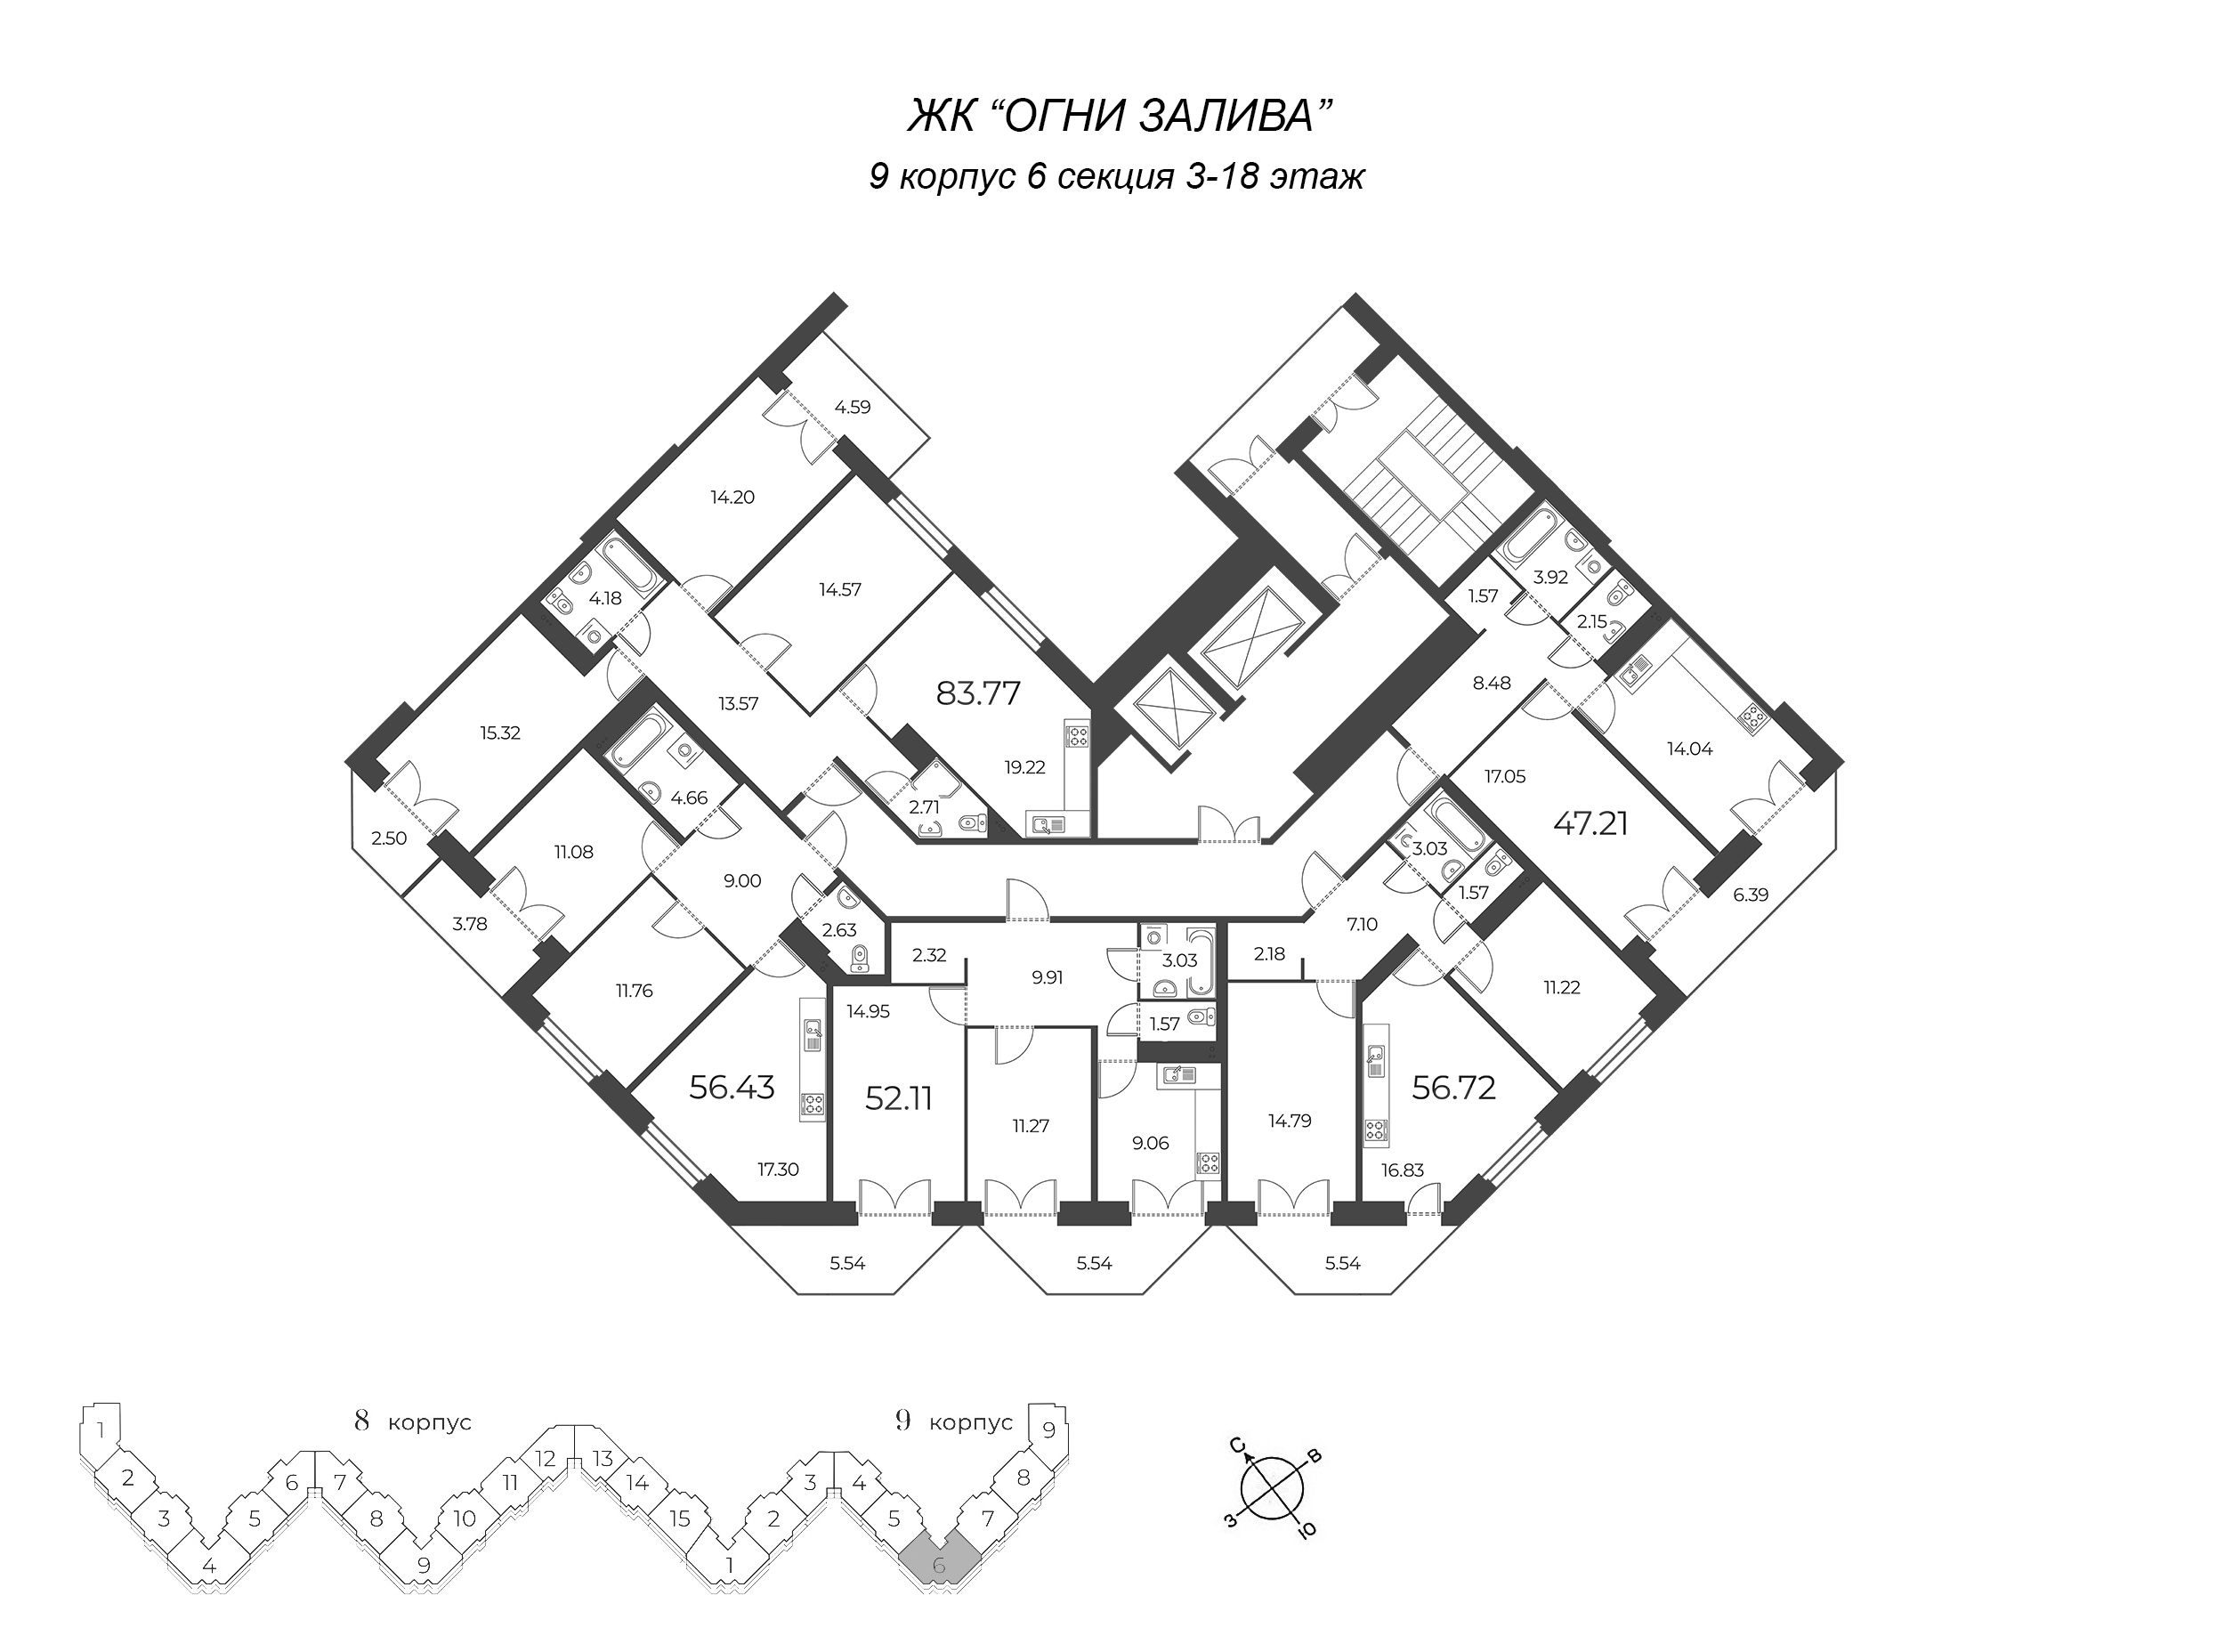 4-комнатная (Евро) квартира, 87.32 м² - планировка этажа